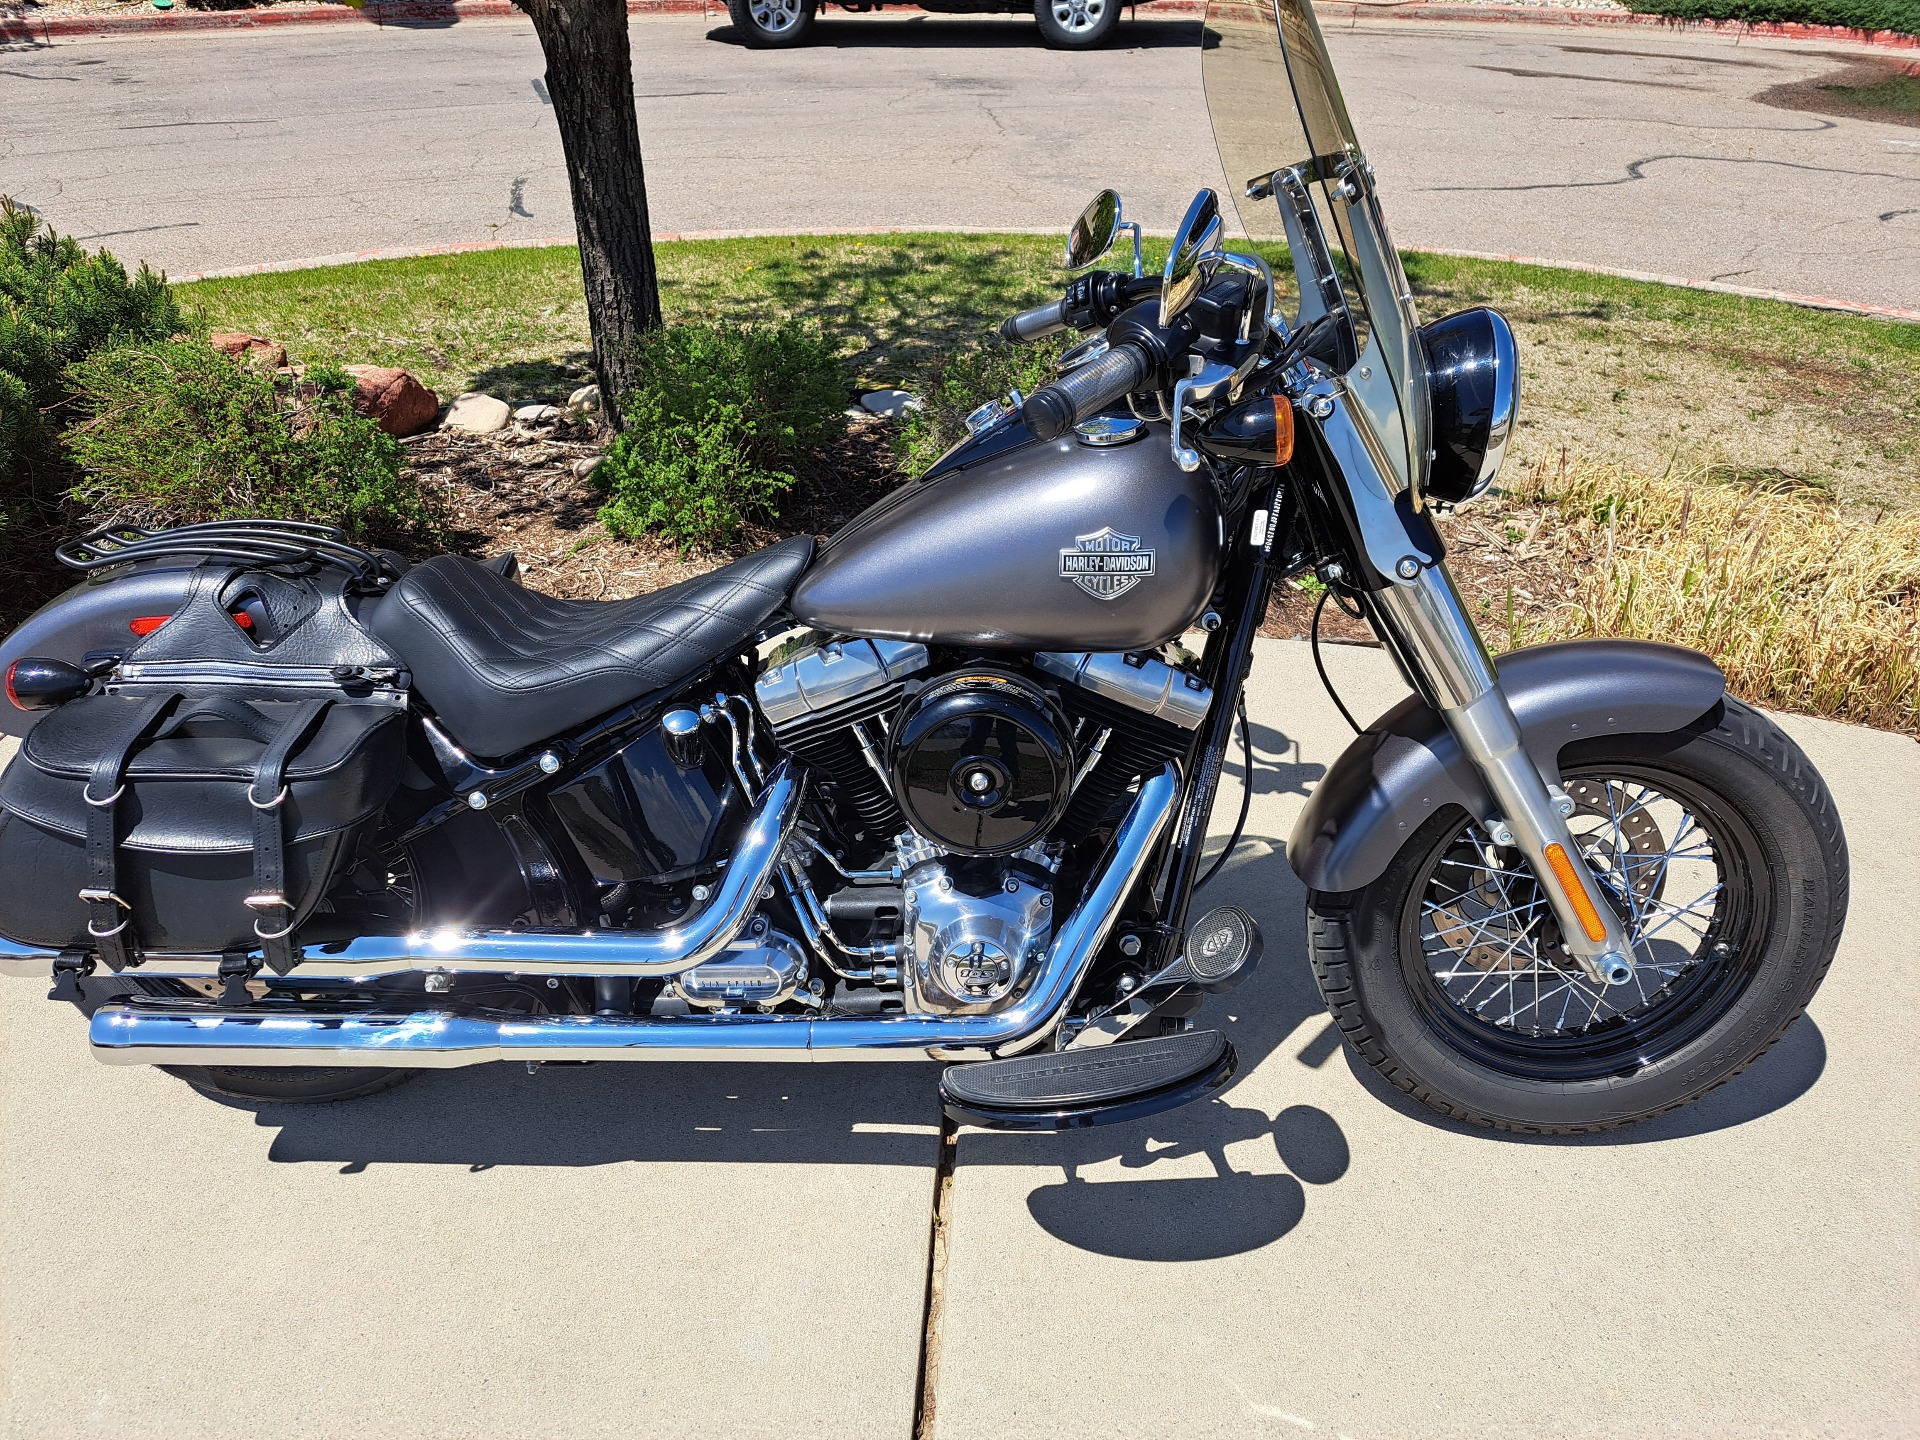 2015 Harley-Davidson Softail Slim® in Loveland, Colorado - Photo 1